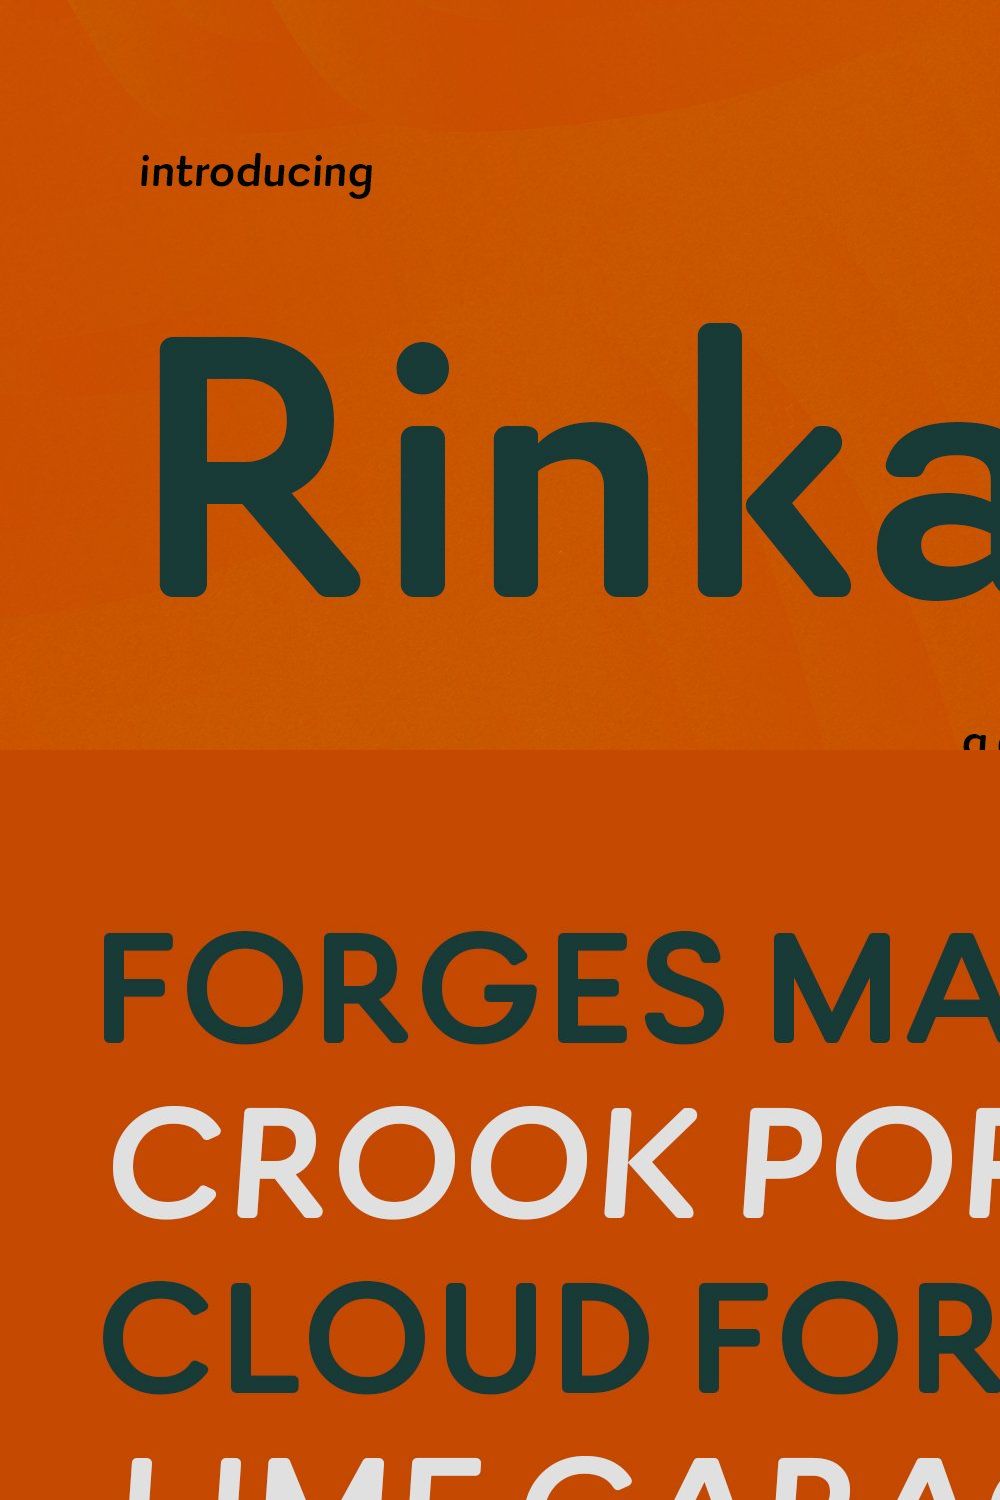 Rinkart Sans Display Font pinterest preview image.